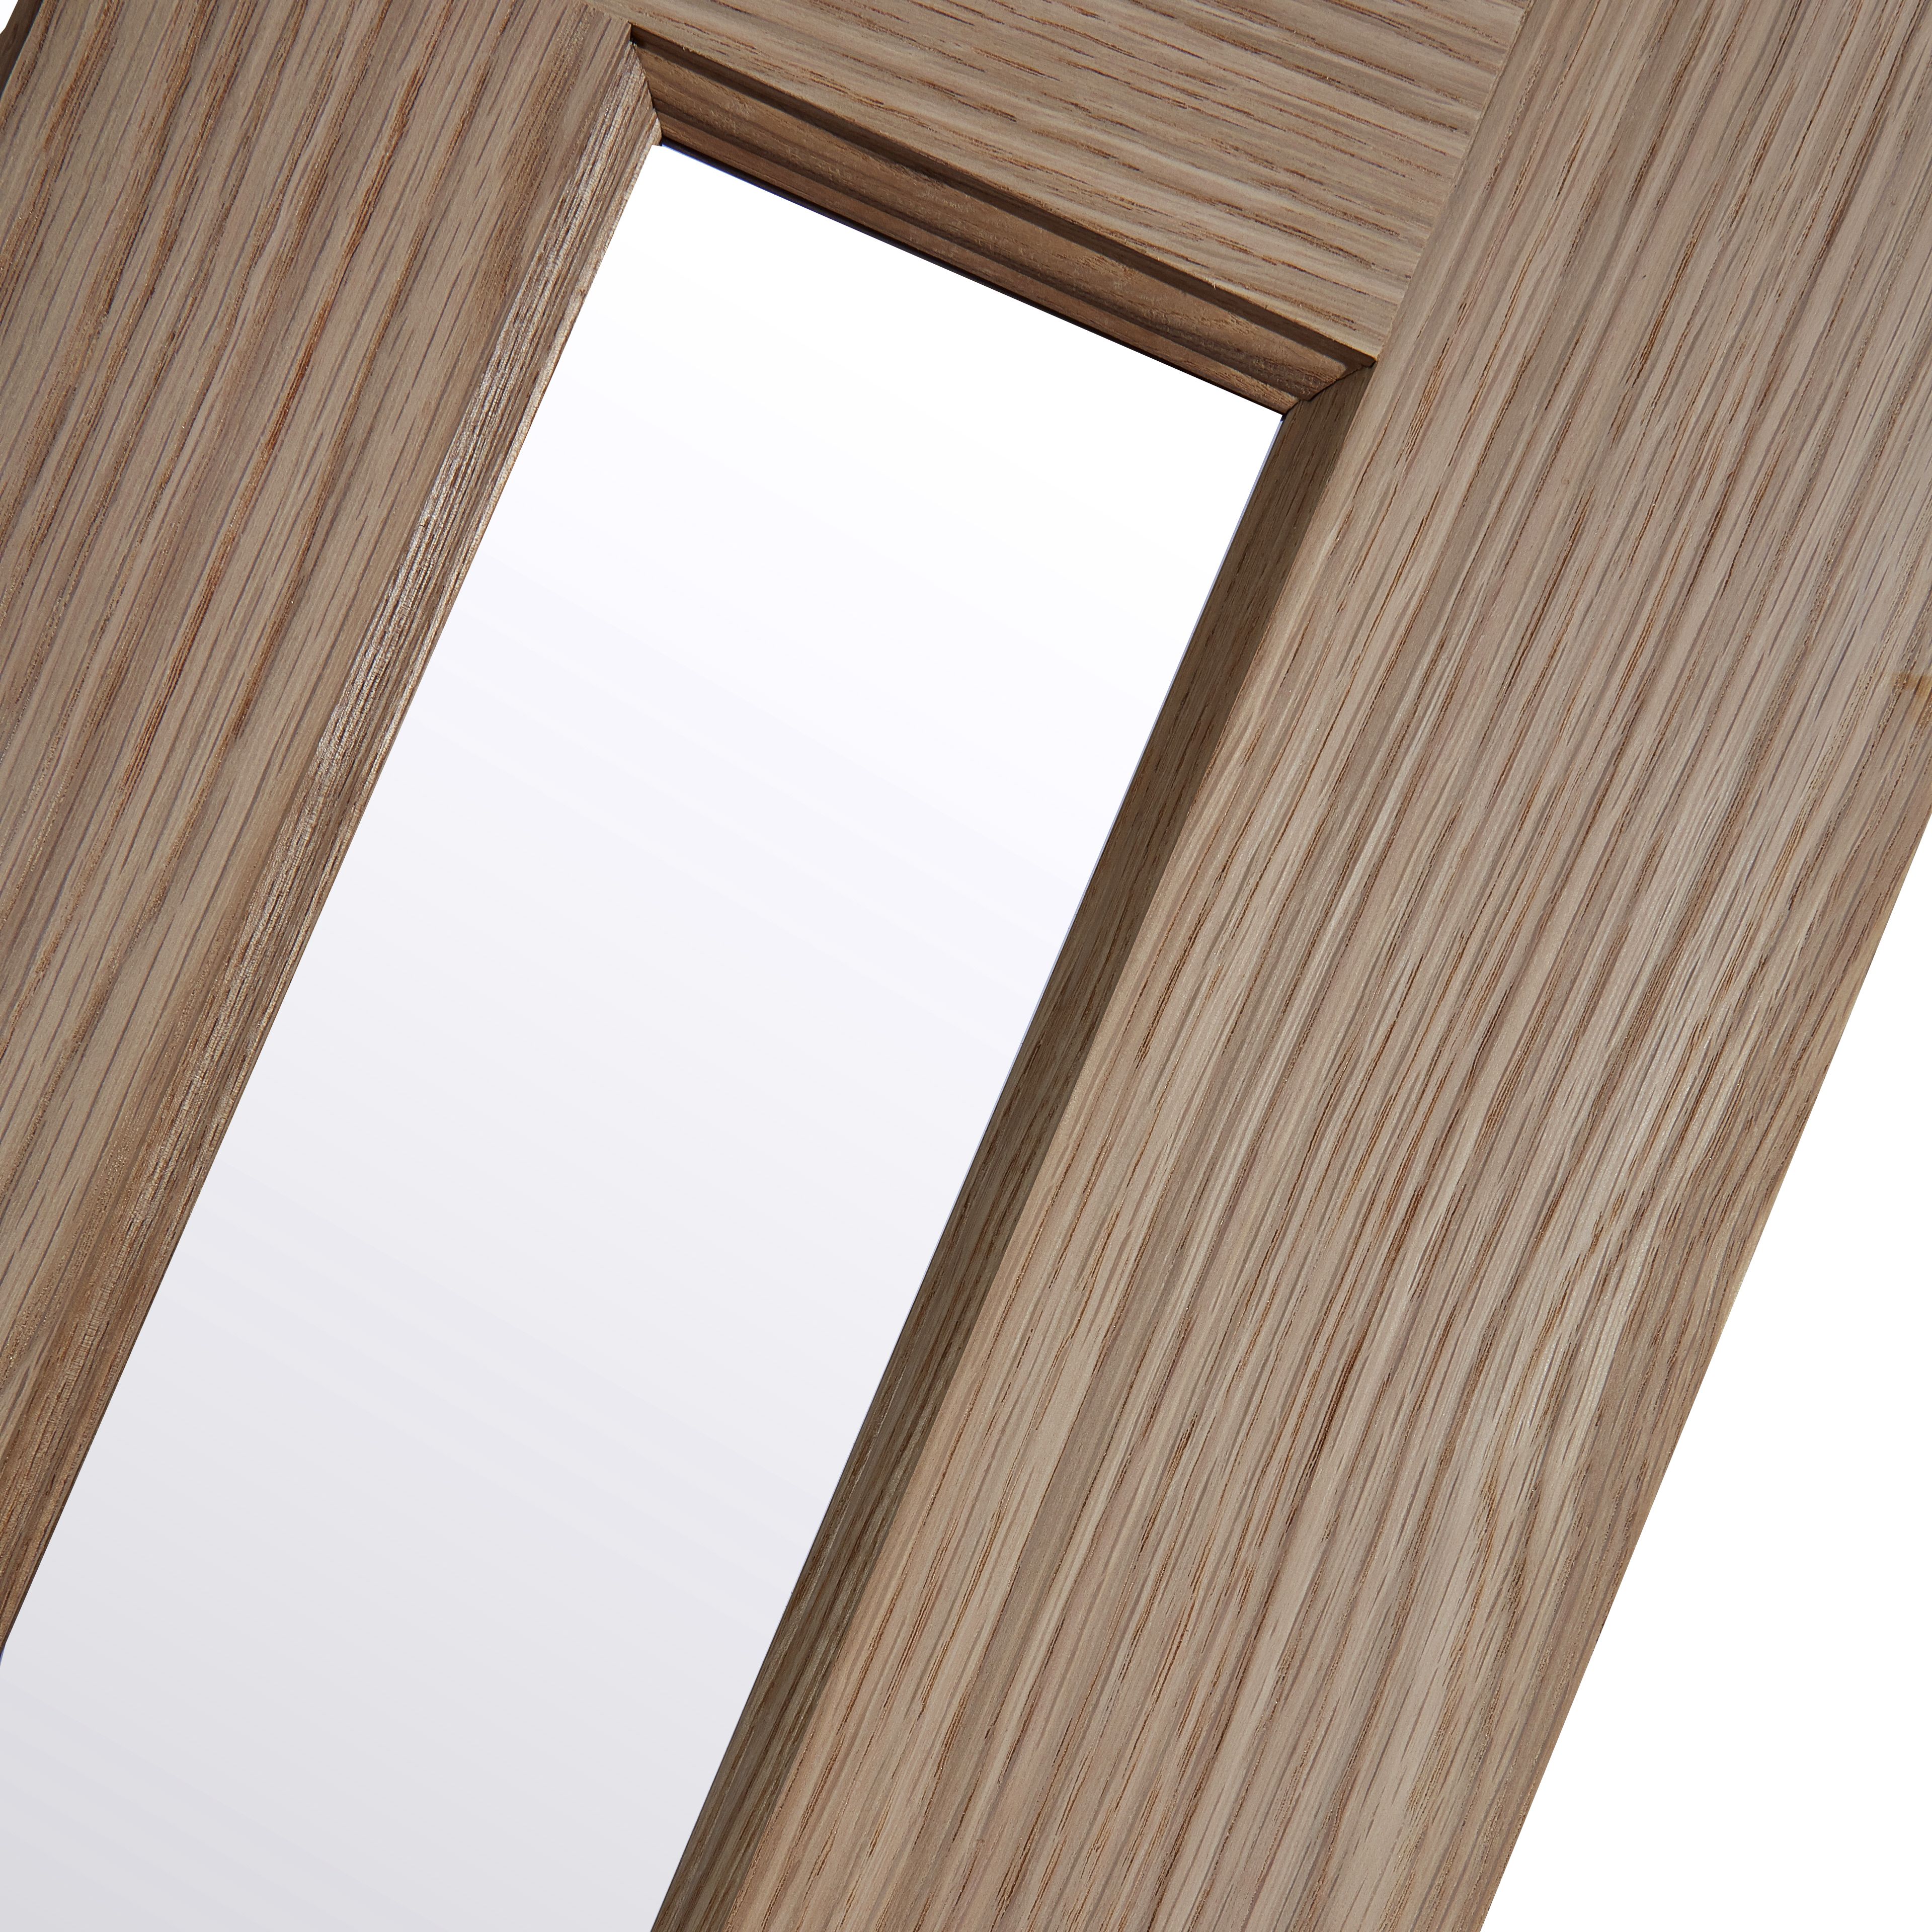 Vertical 3 panel Frosted Glazed Oak veneer Internal Door, (H)1981mm (W)838mm (T)35mm